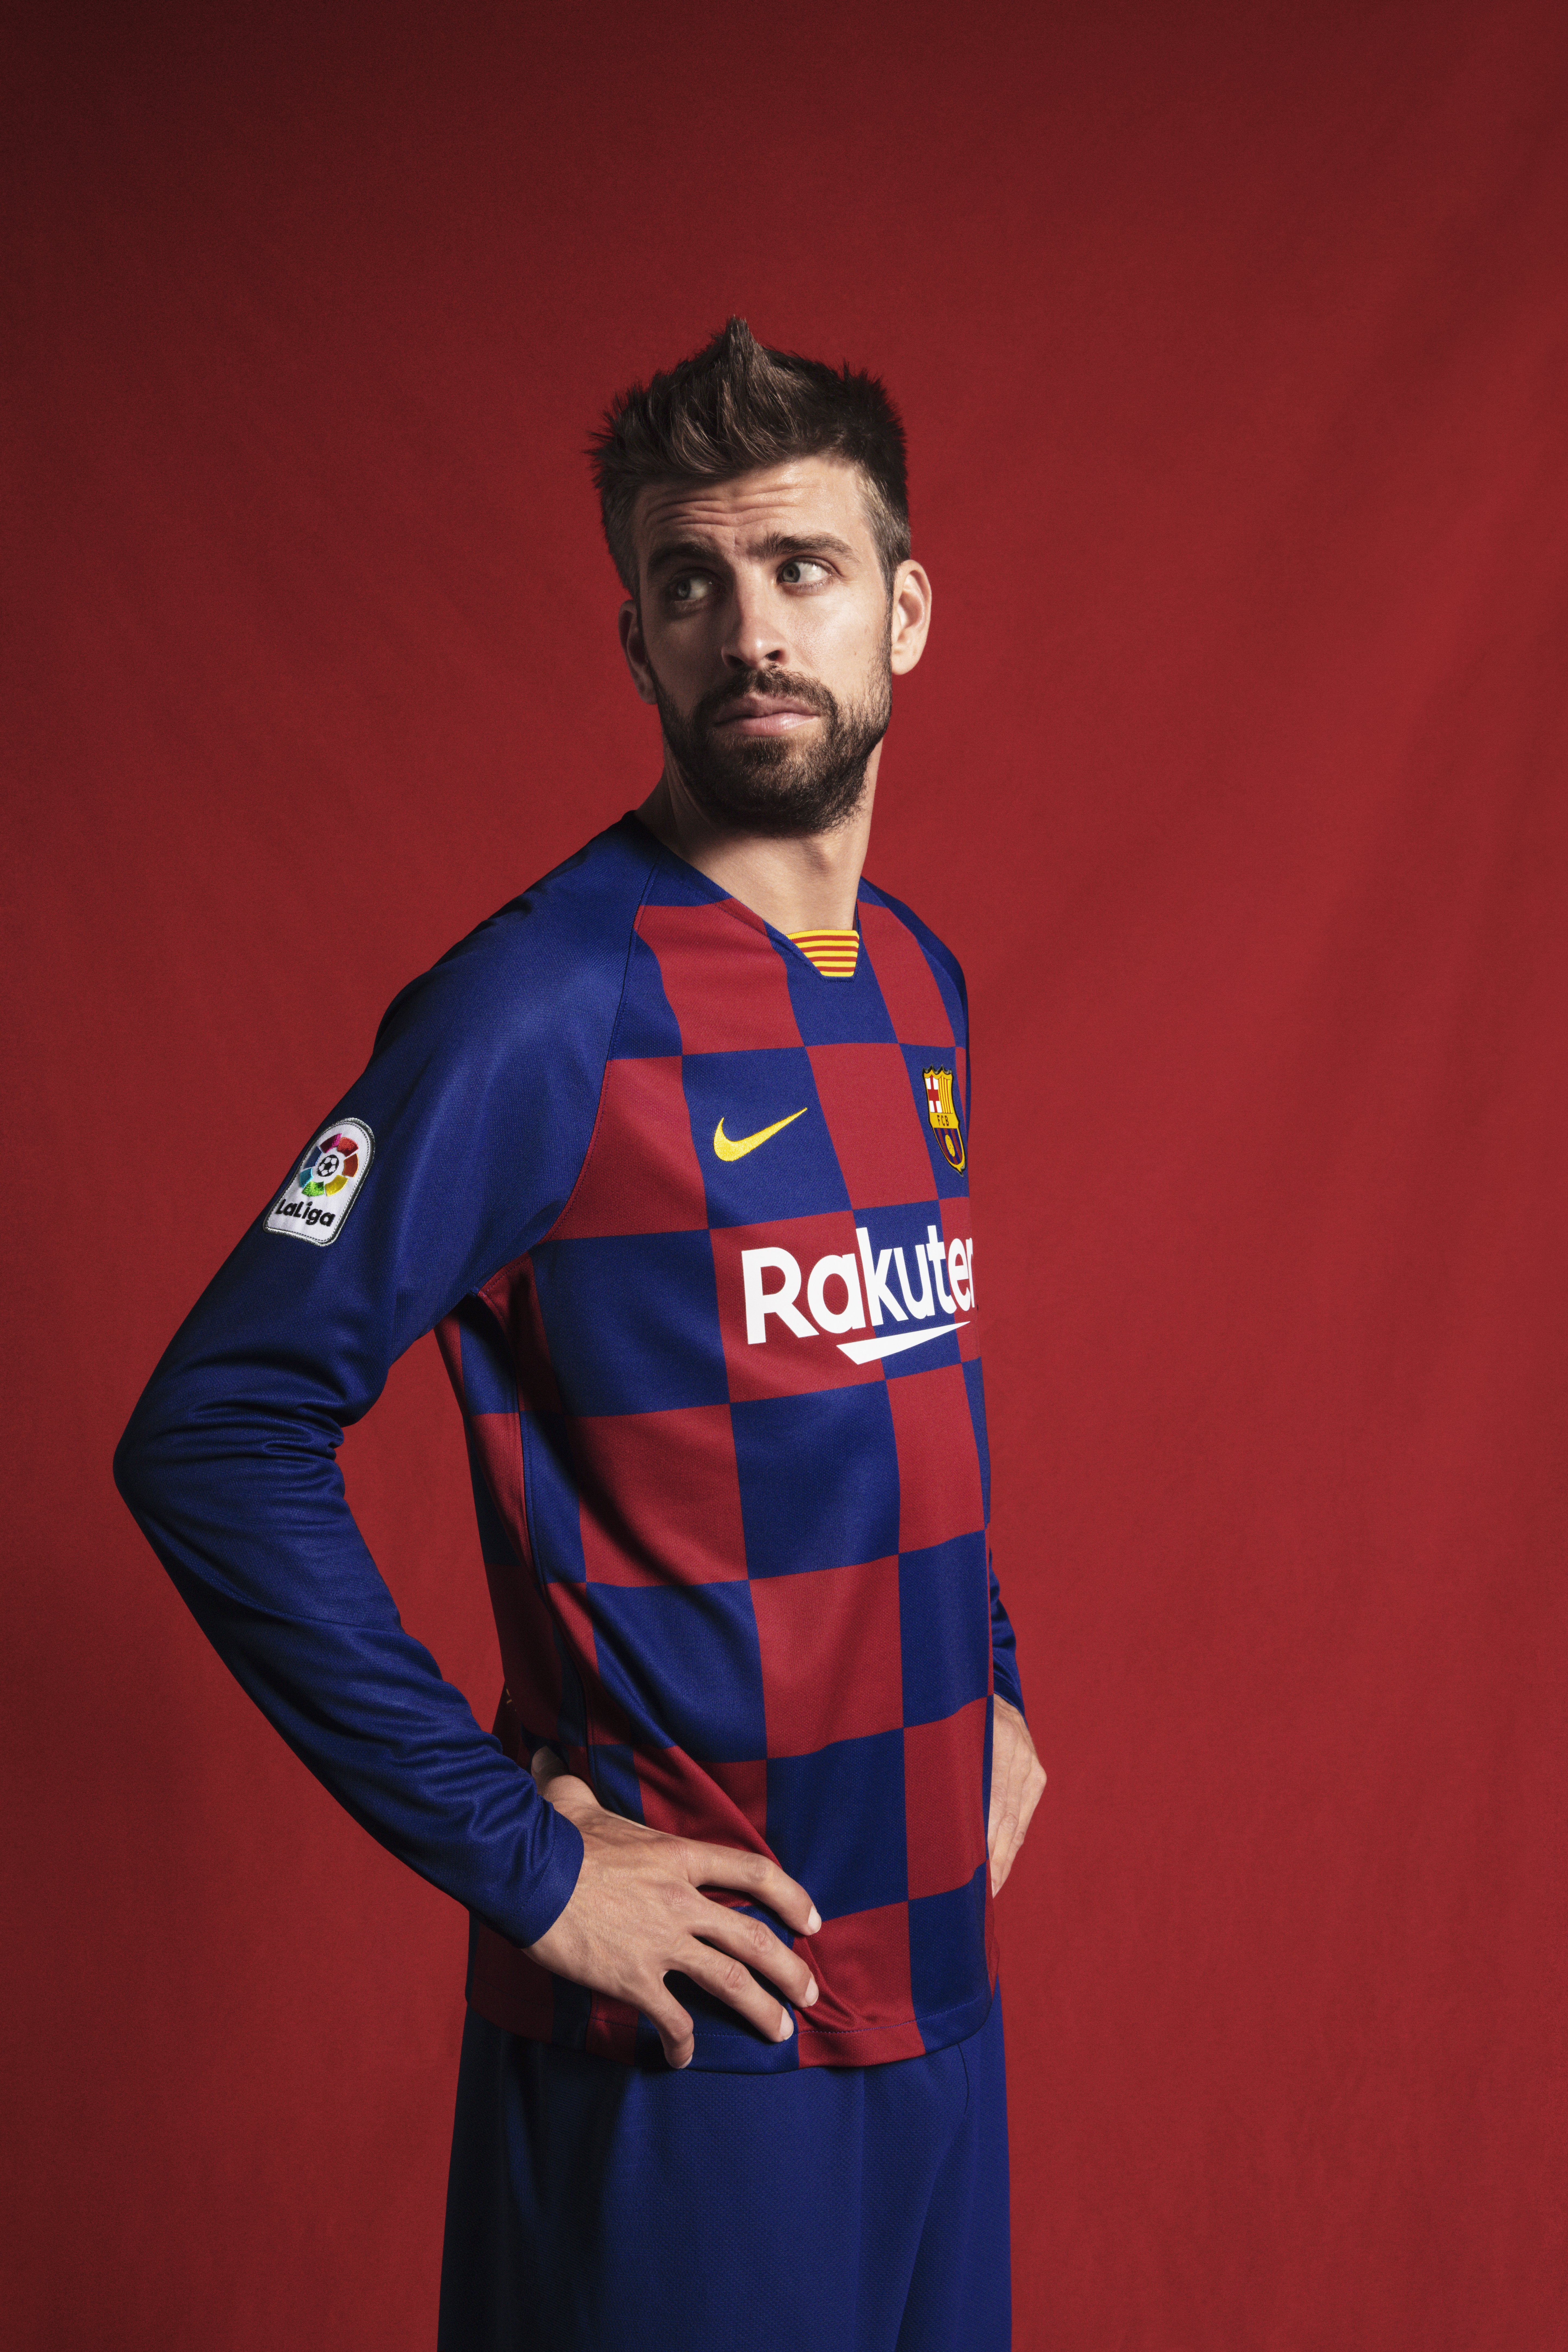 El Barça y Nike polémica camiseta ajedrezada